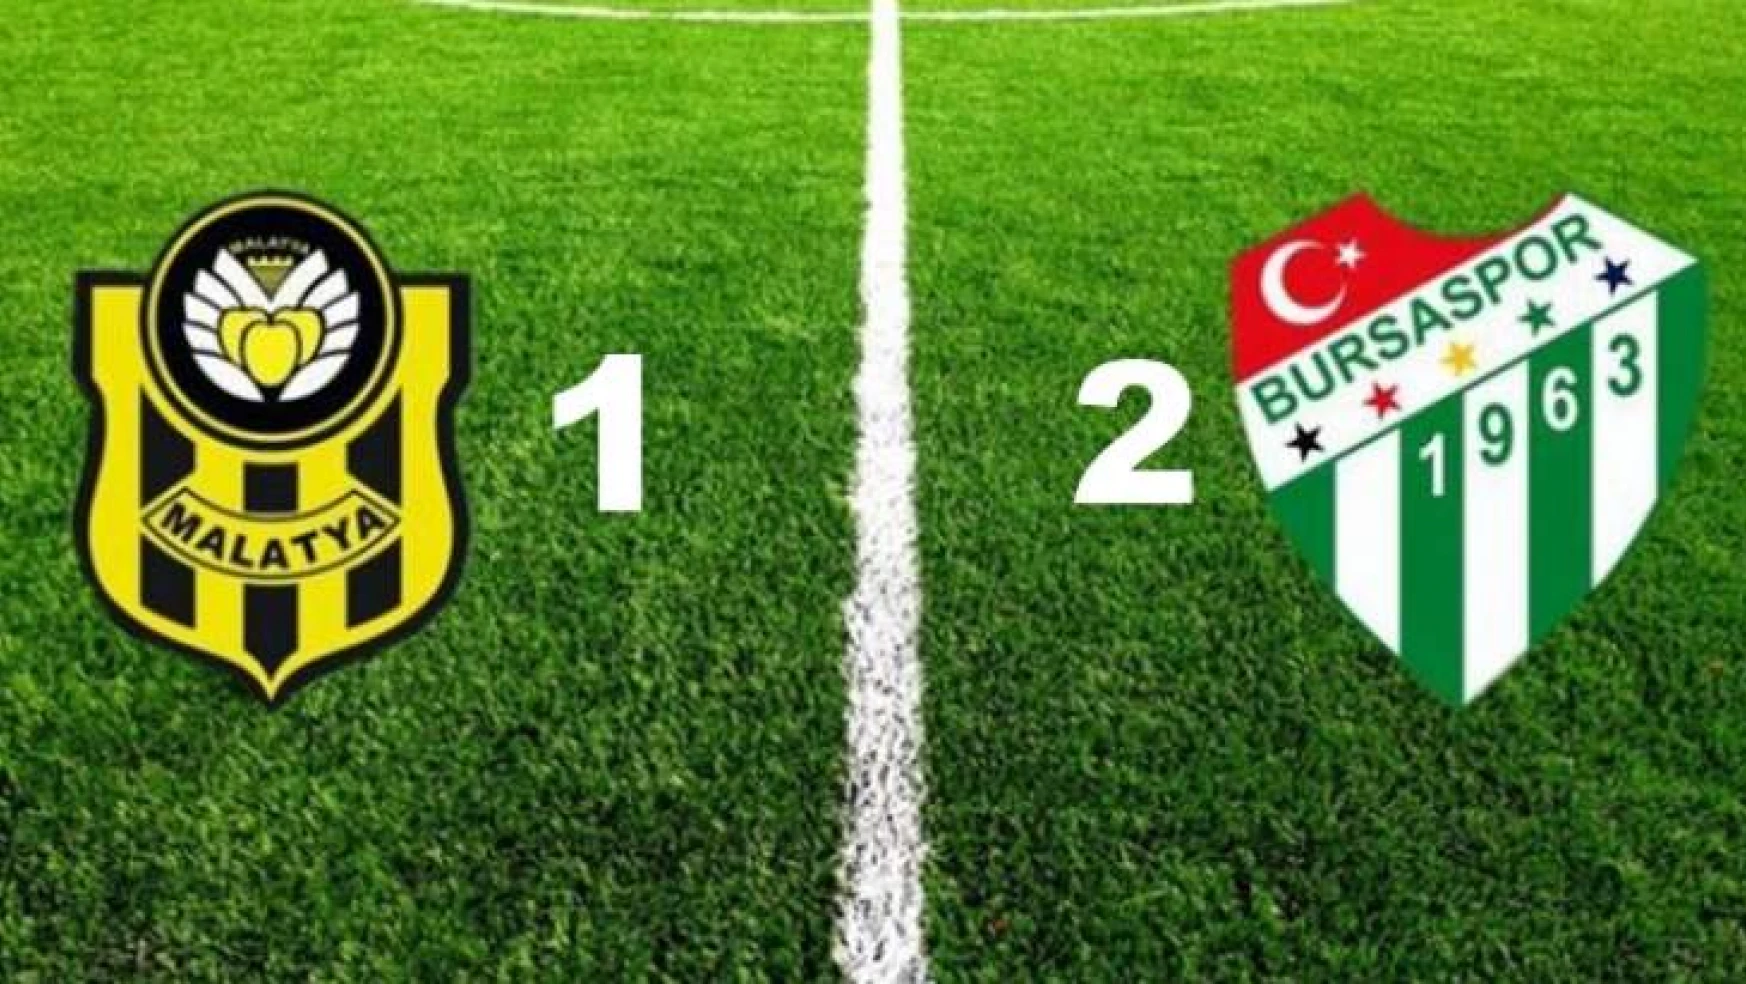 Evkur Yeni Malatyaspor - Bursaspor : 1-2